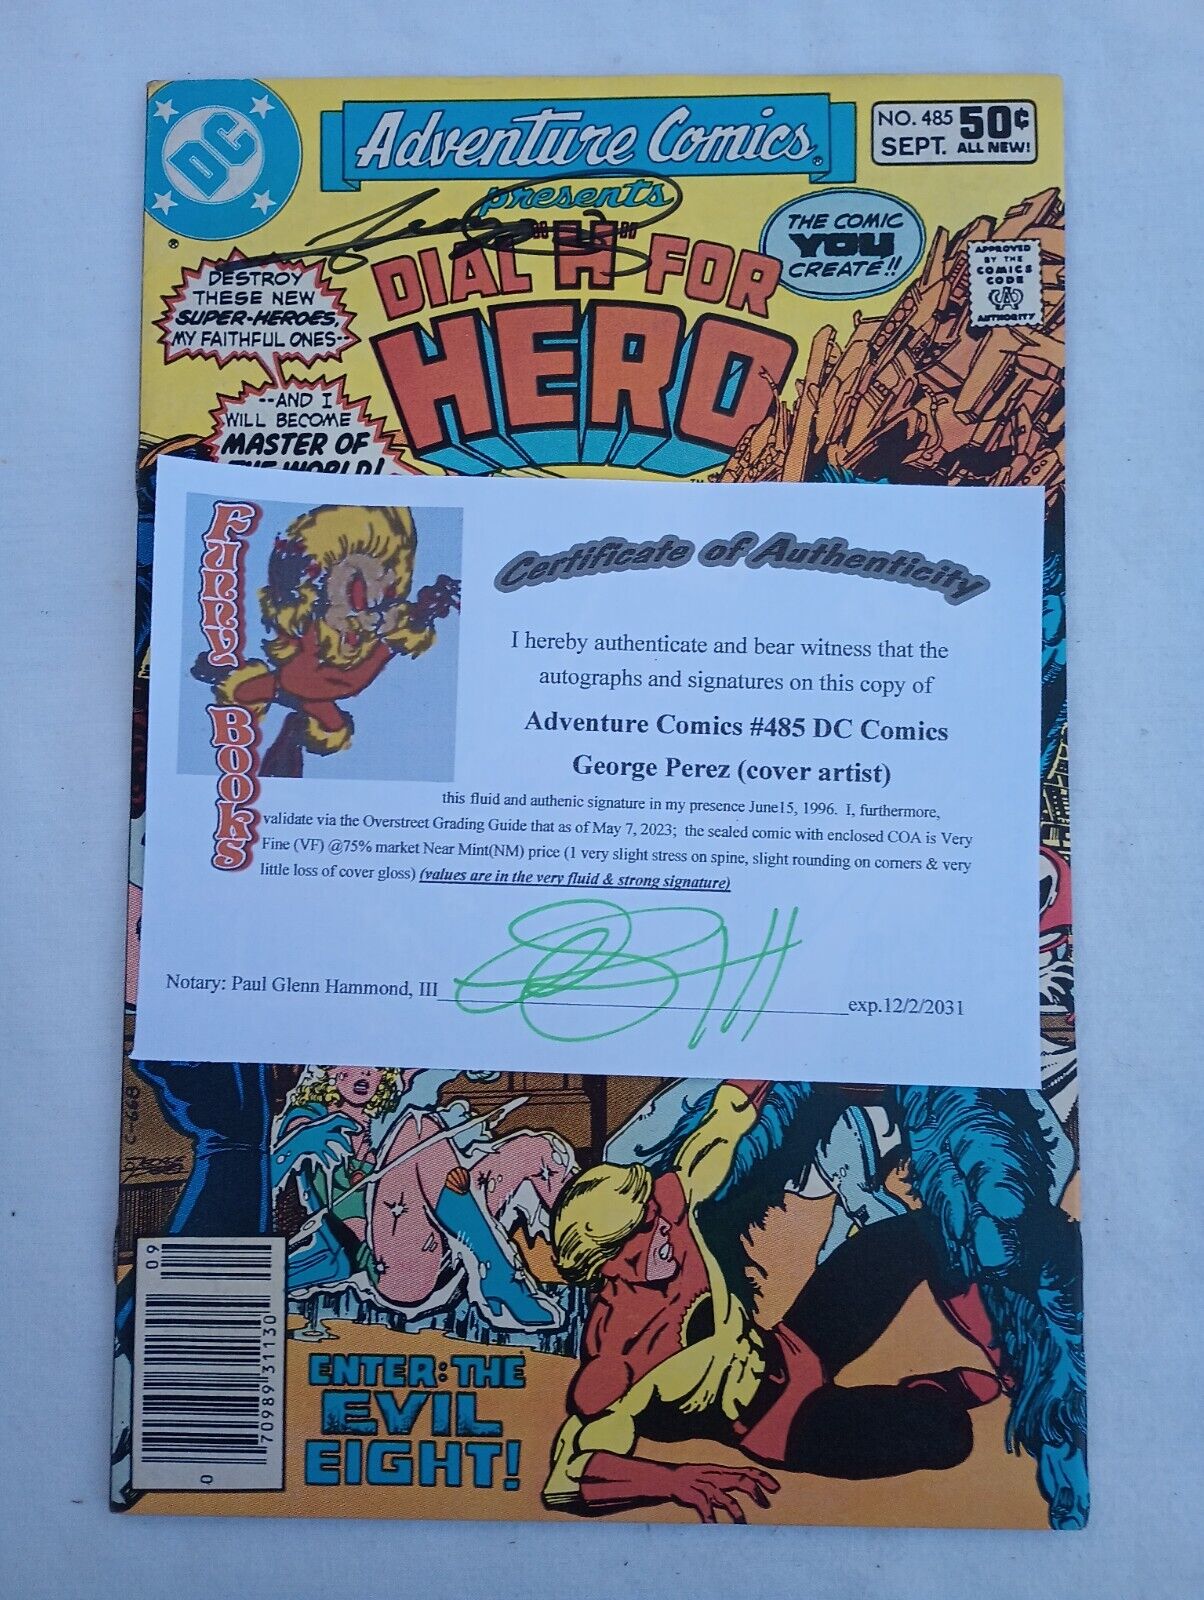 Adventure Comics #485 DC Comics signed by George Perez